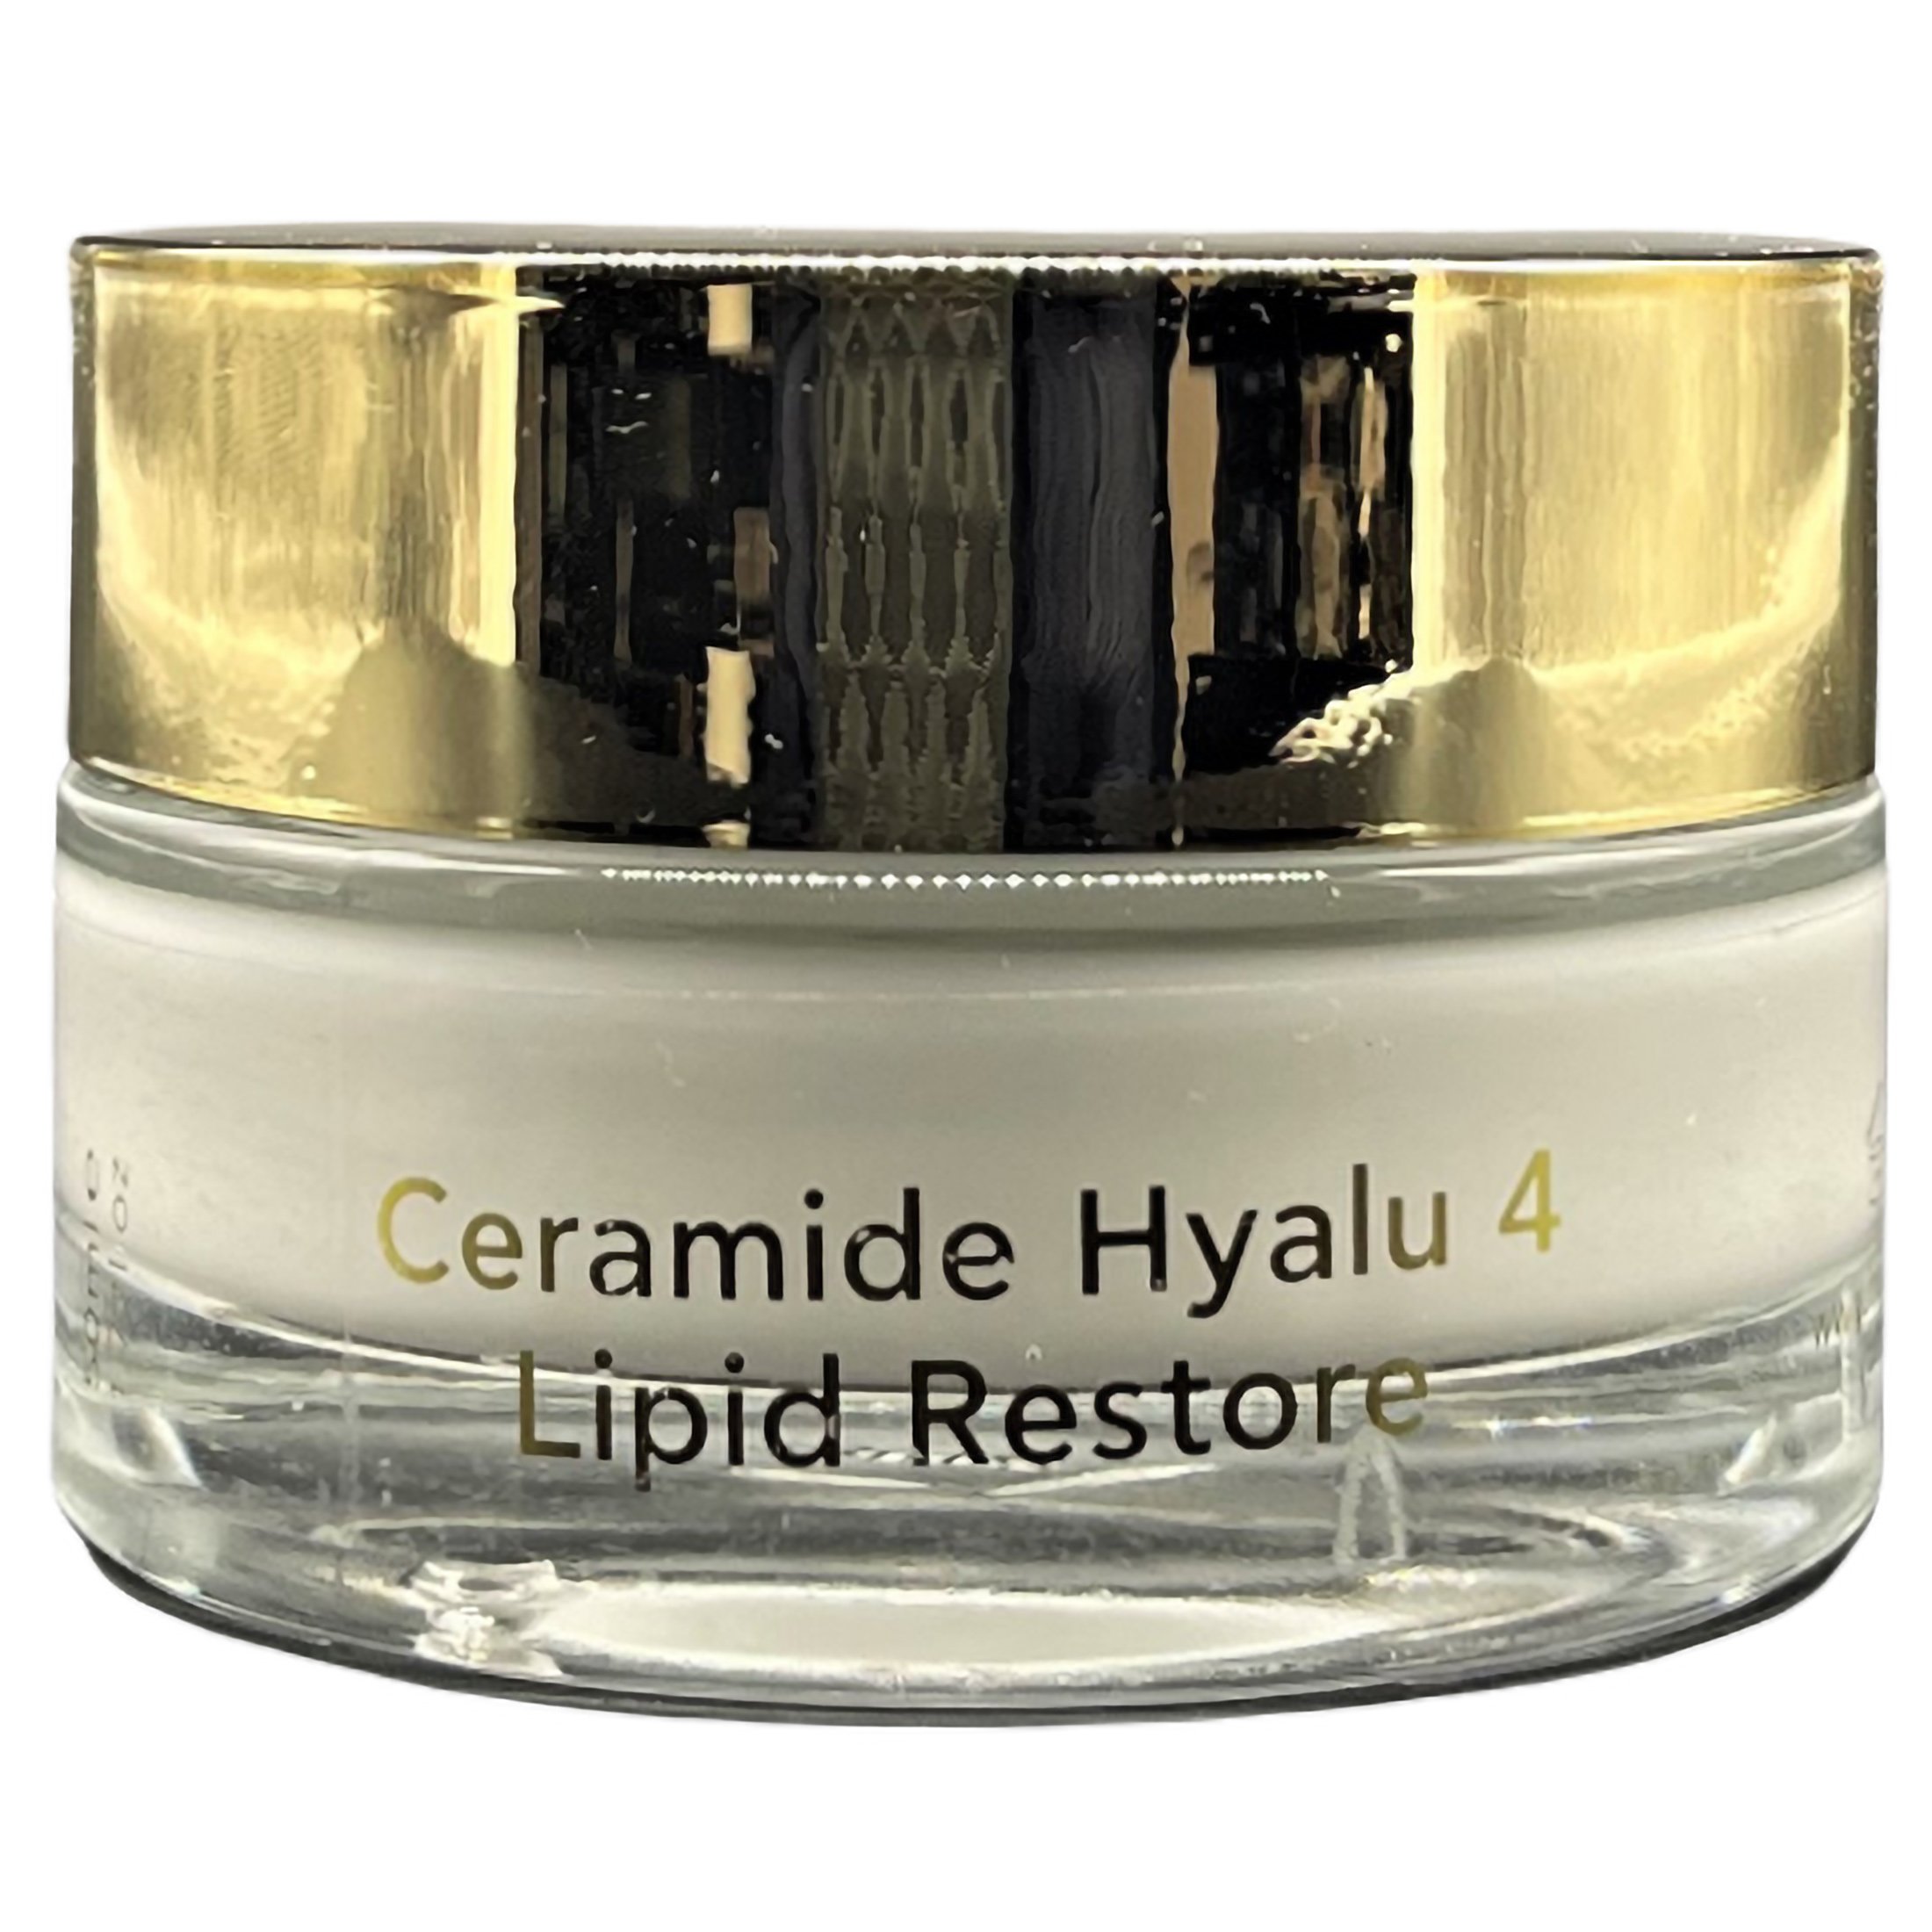 Inalia Ceramide Hyalu 4 Lipid Restore Face Cream Κρέμα Προσώπου για Μείωση των Ρυτίδων & των Λεπτών Γραμμών, Κατάλληλη για Όλους τους Τύπους Δέρματος 50ml